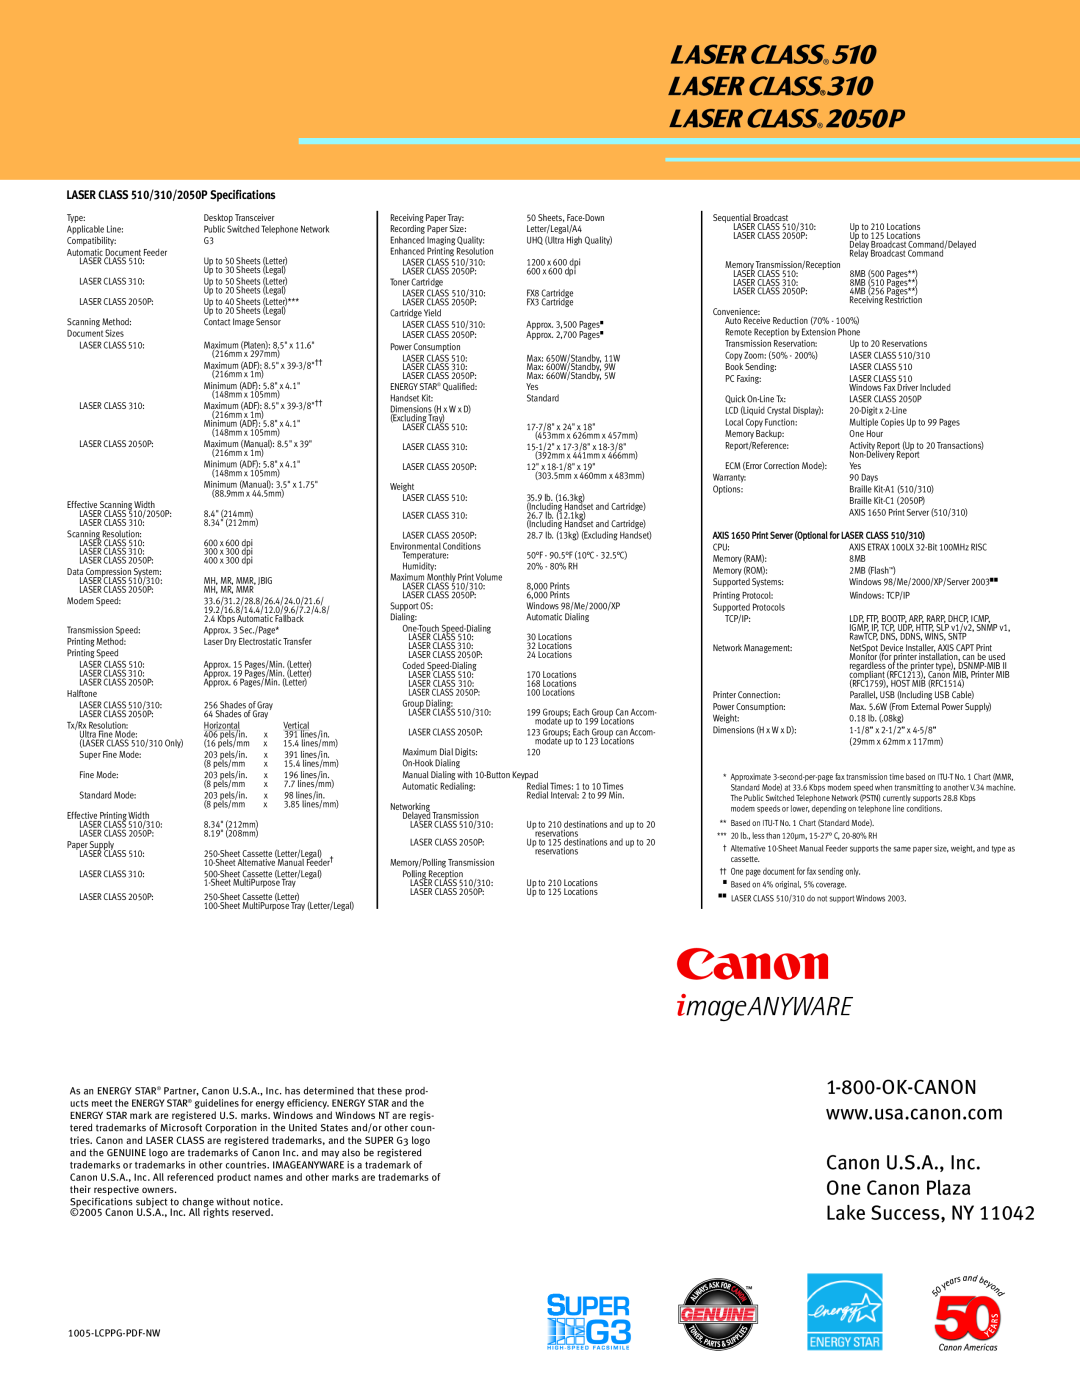 Canon manual Canon U.S.A., Inc One Canon Plaza Lake Success, NY, LASER CLASS 510/310/2050P Specifications 